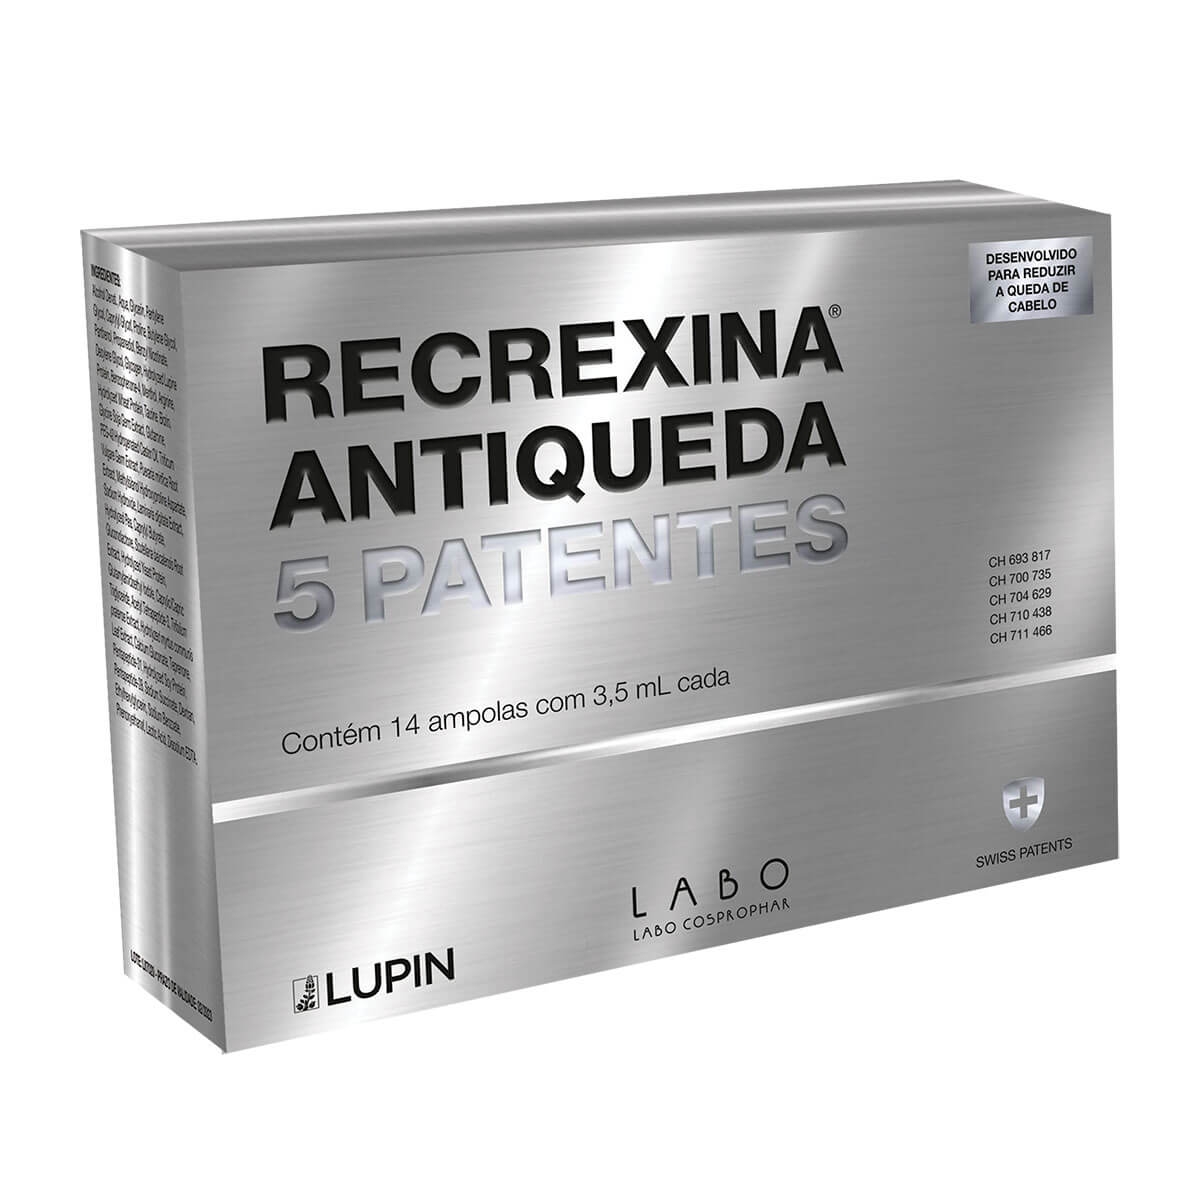 Recrexina Antiqueda 5 Patentes Lupin 14 Ampolas